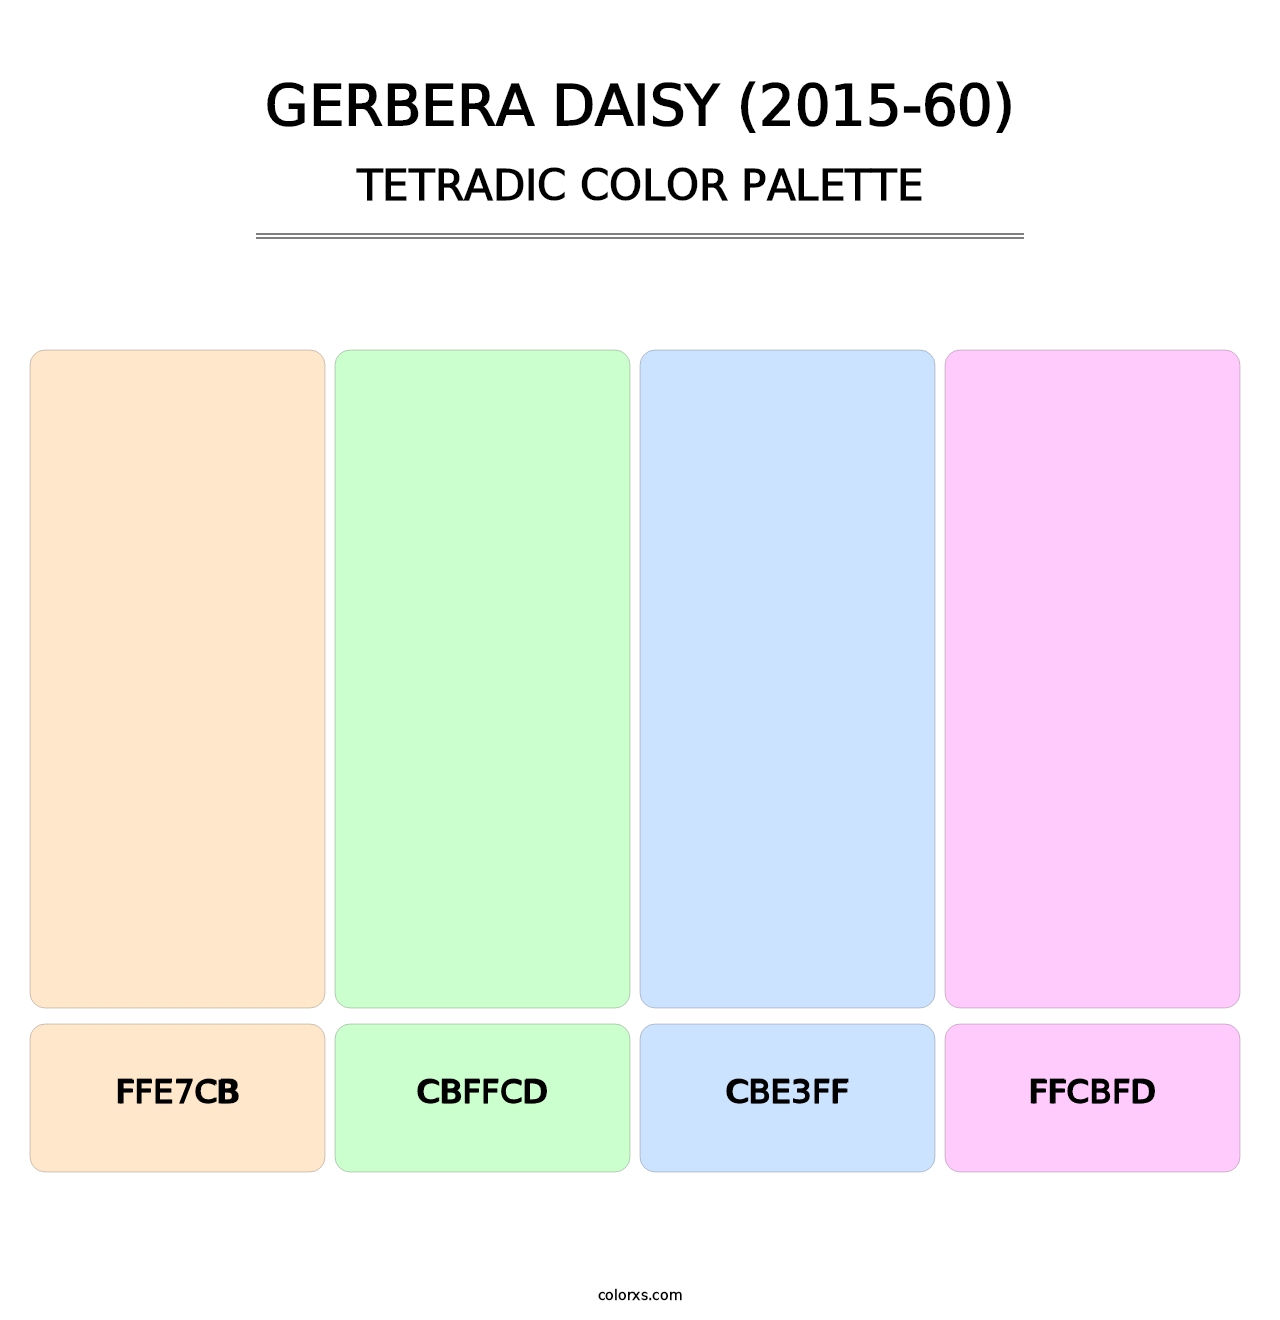 Gerbera Daisy (2015-60) - Tetradic Color Palette